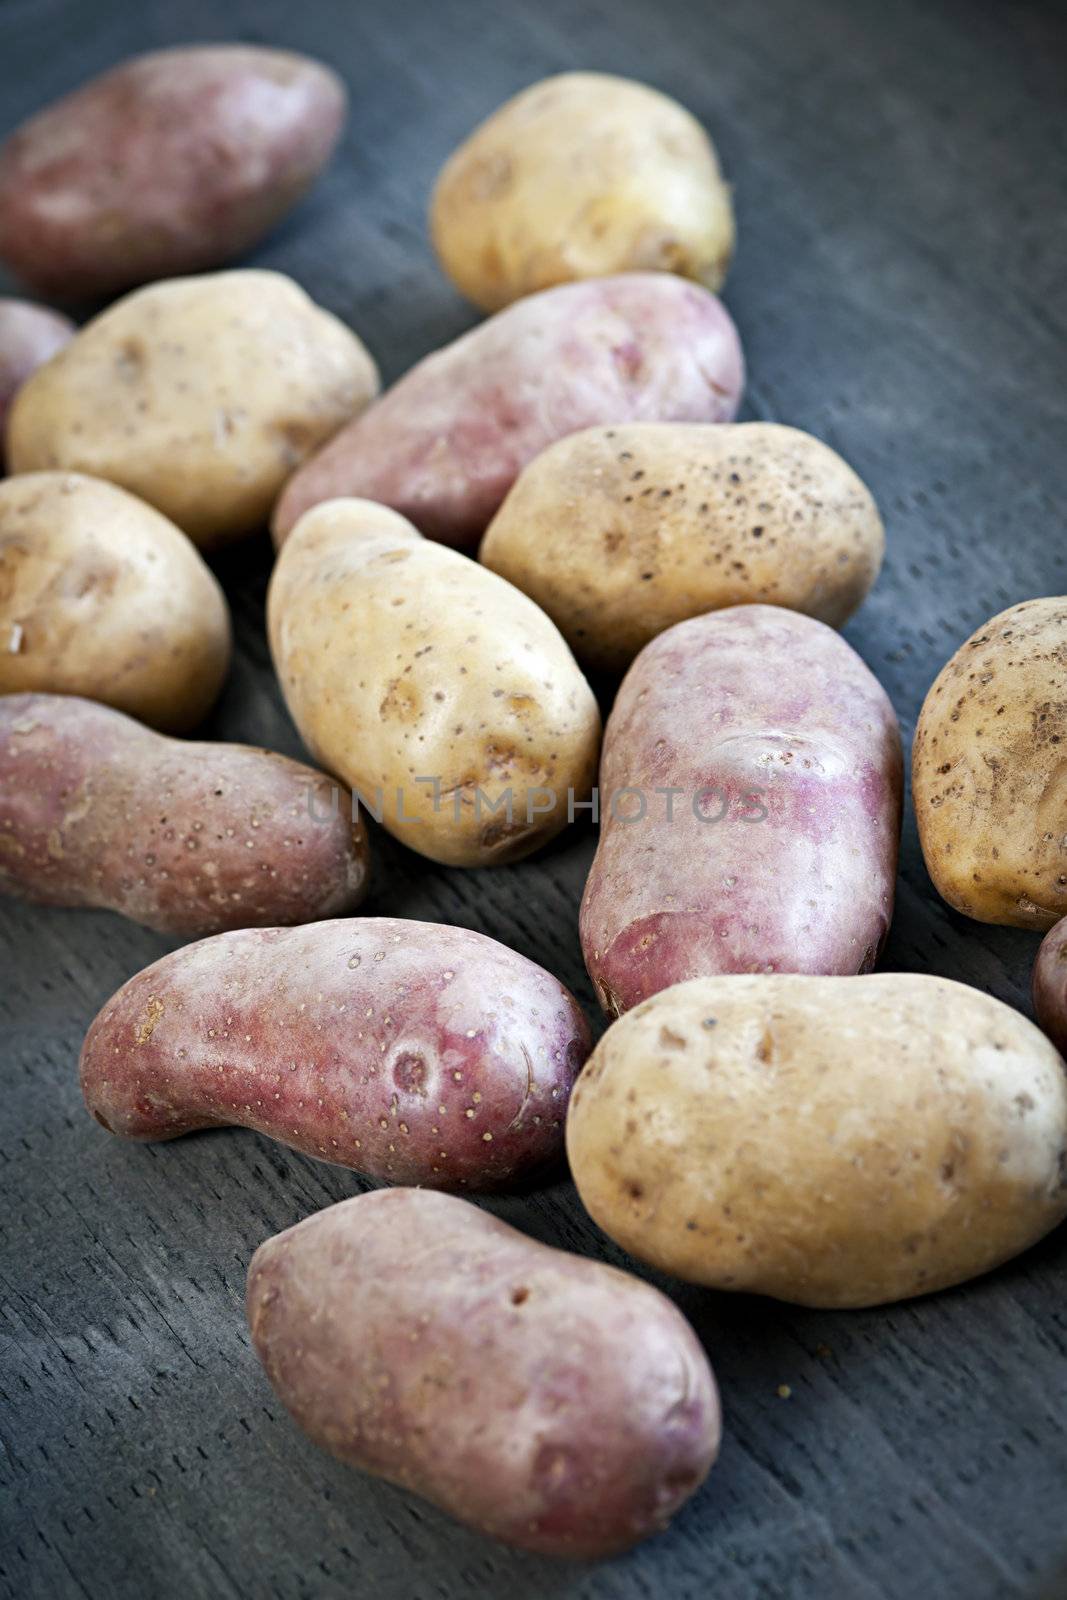 Raw potatoes by elenathewise